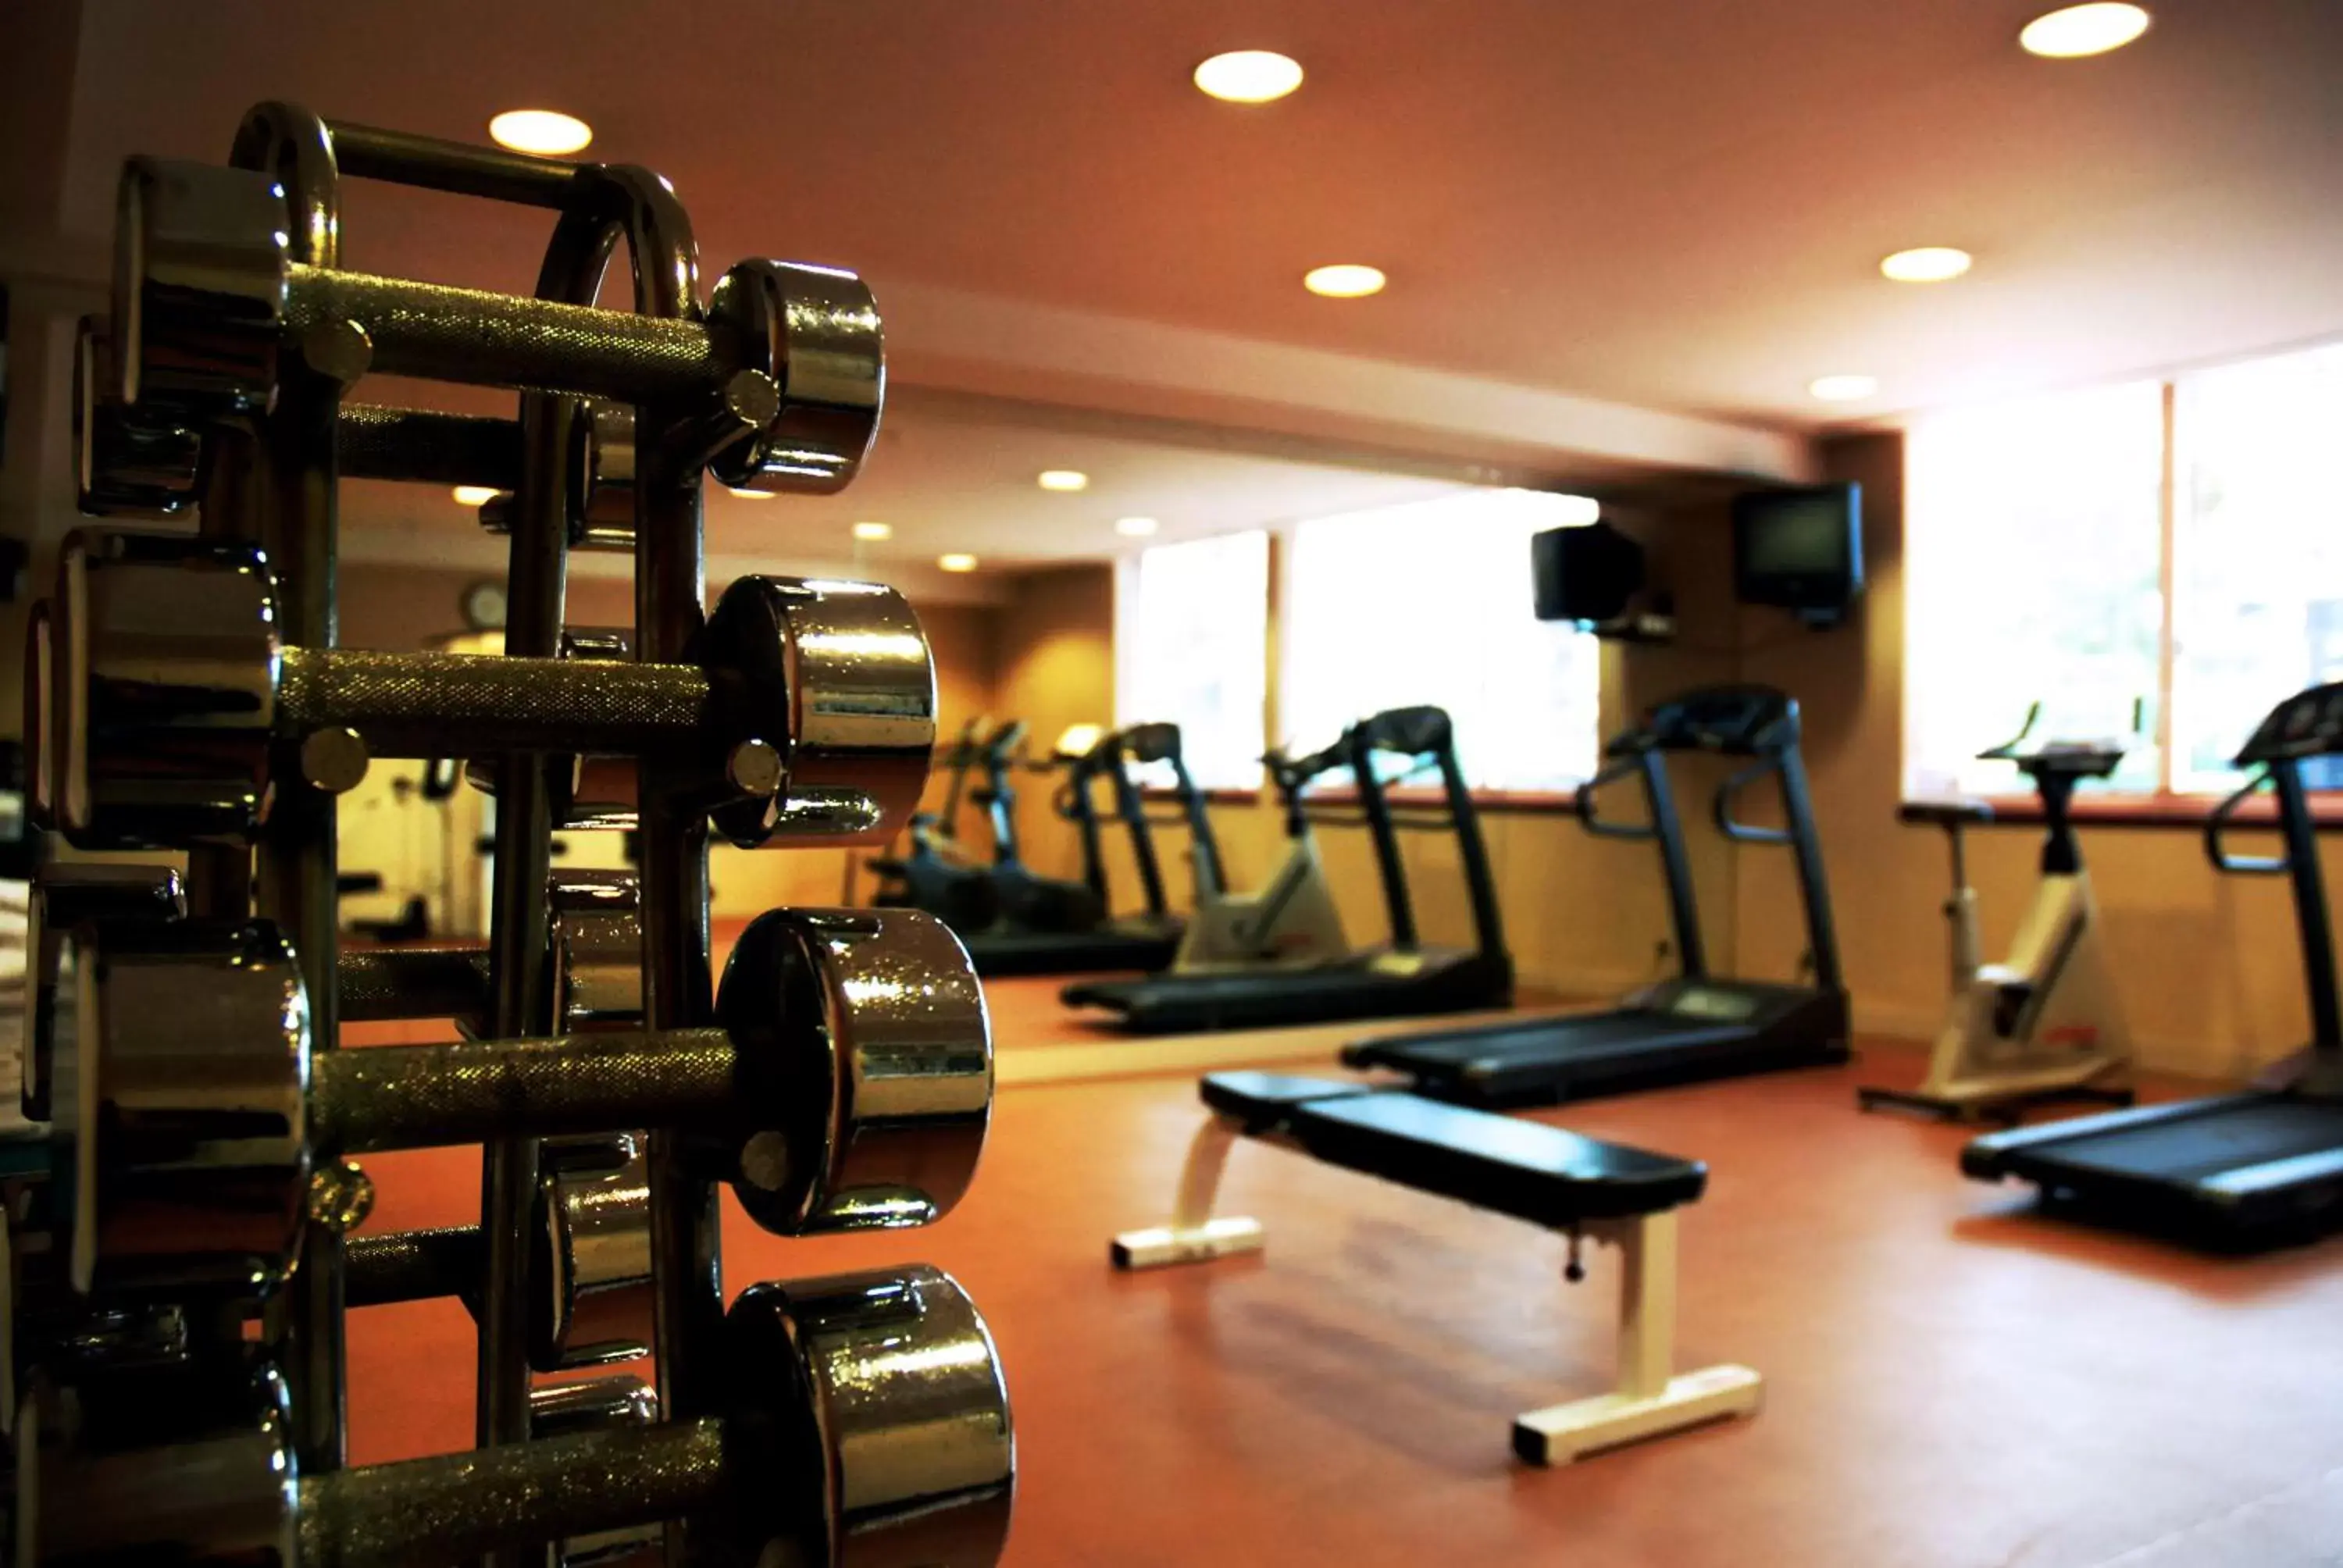 Fitness centre/facilities, Fitness Center/Facilities in Evergreen Laurel Hotel